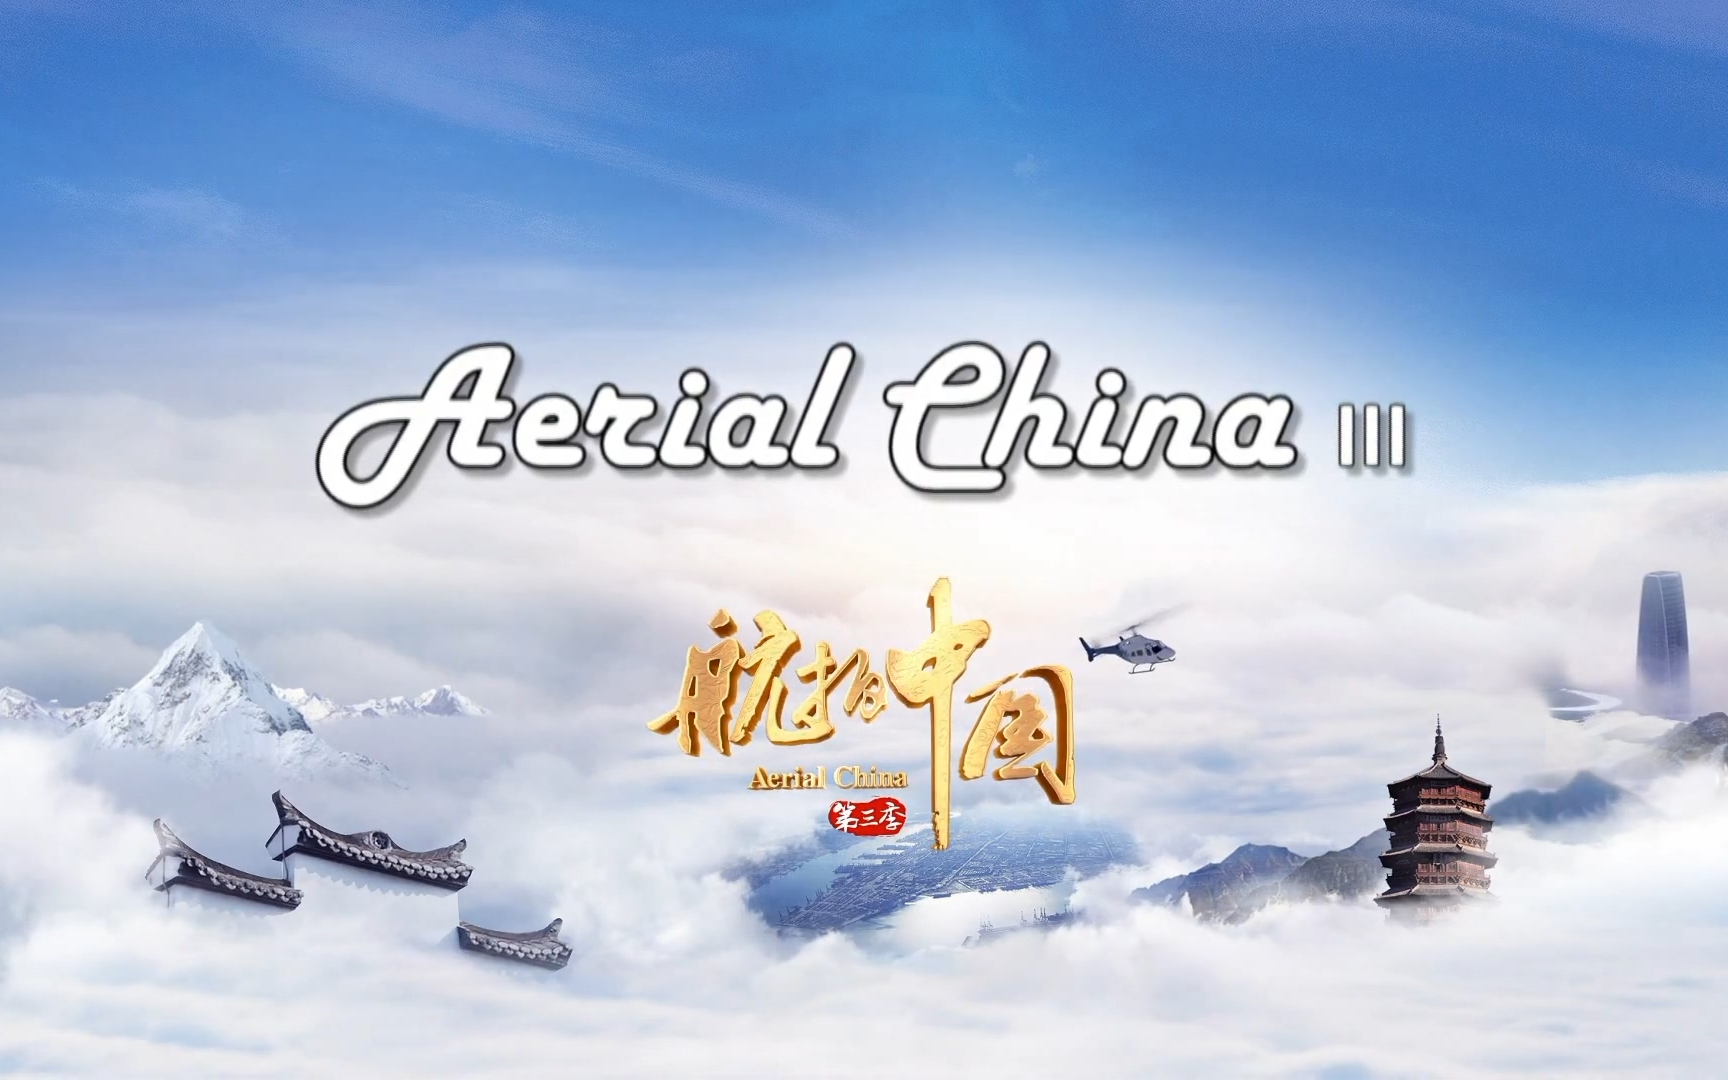 【英语版】航拍中国 第三季 片头 Aerial China III Trailer